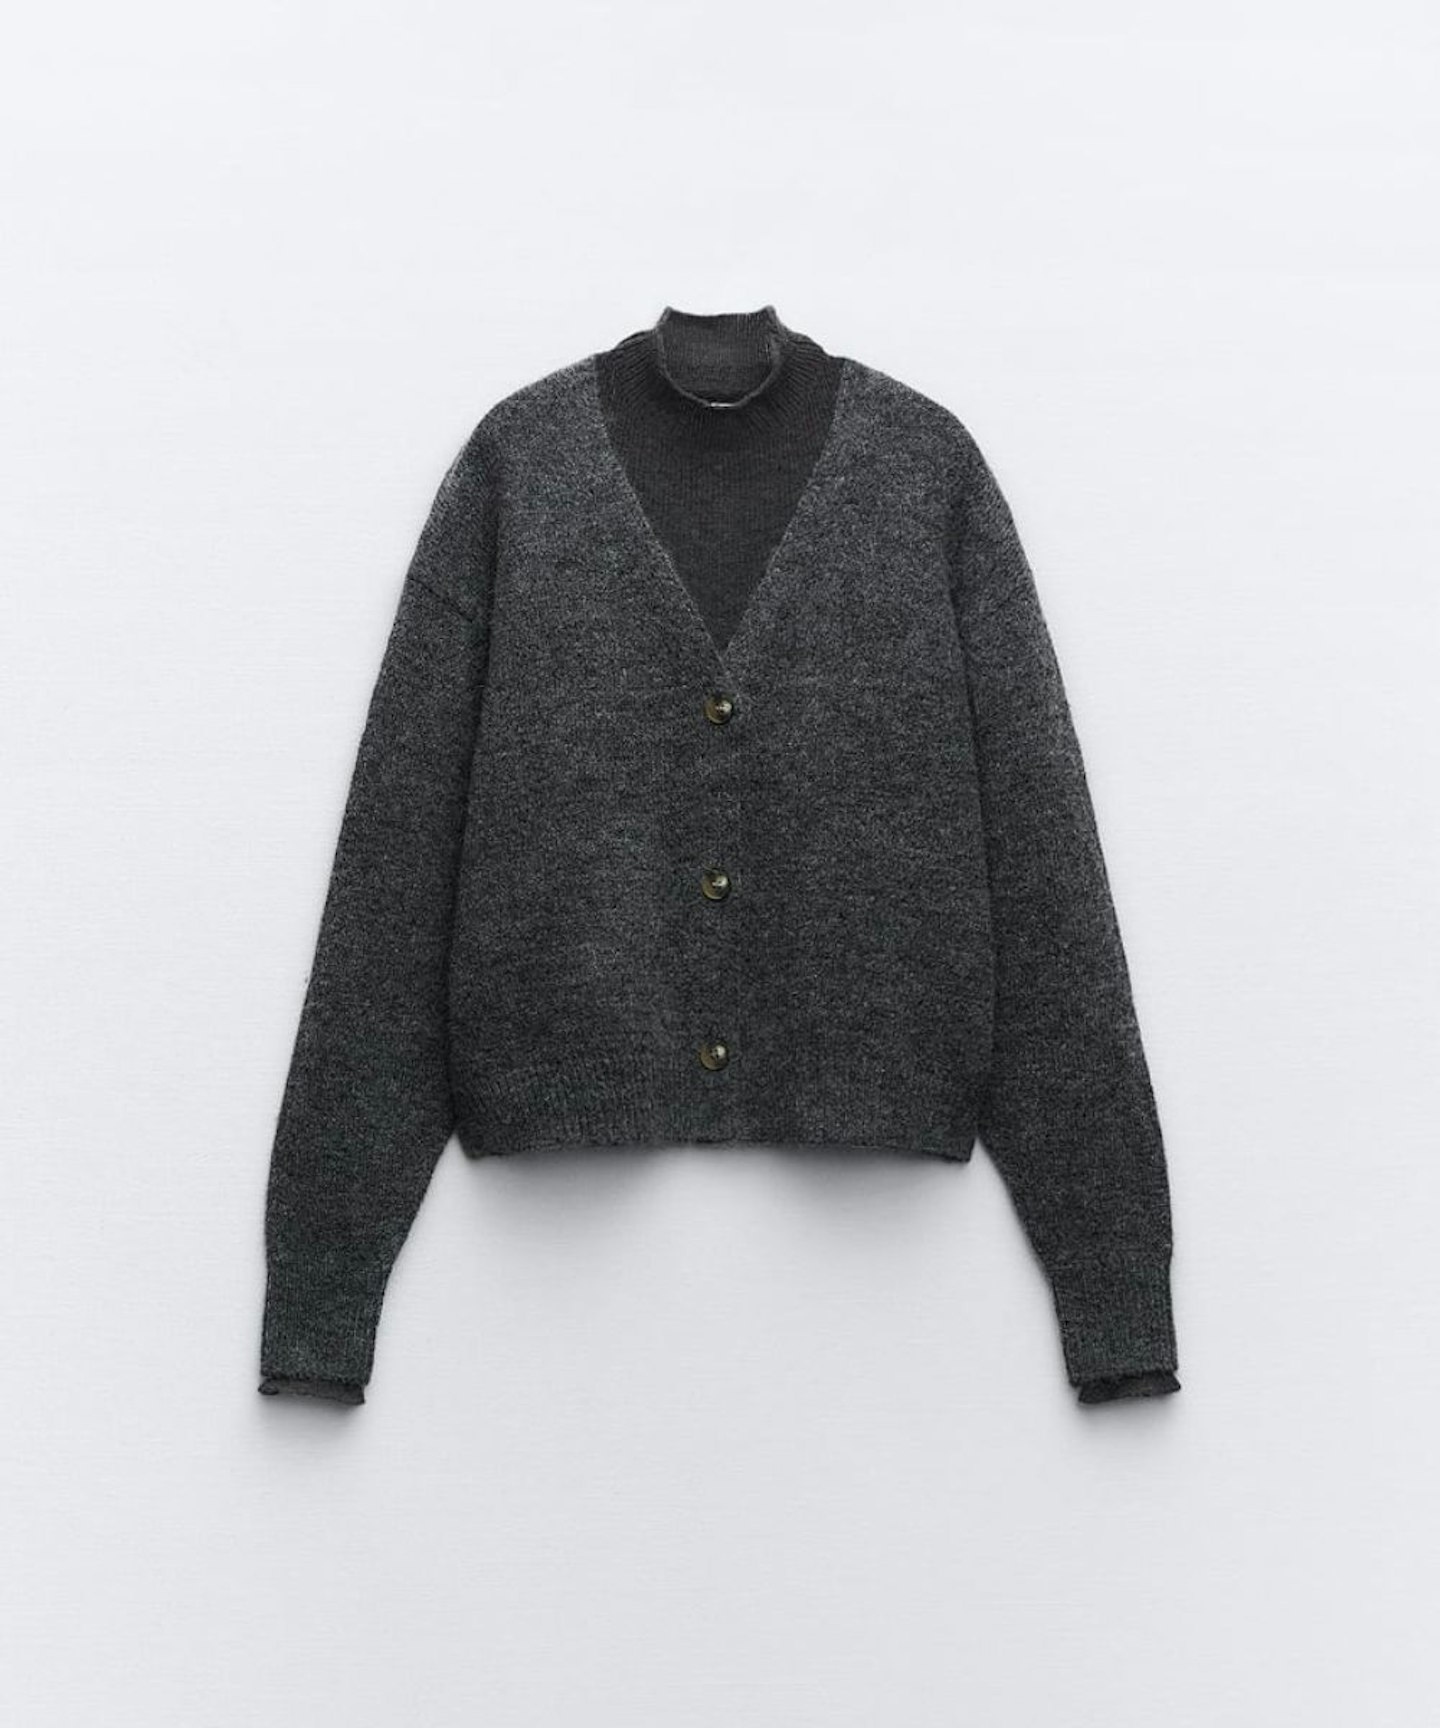 Contrast Semi-Sheer Knit Sweater